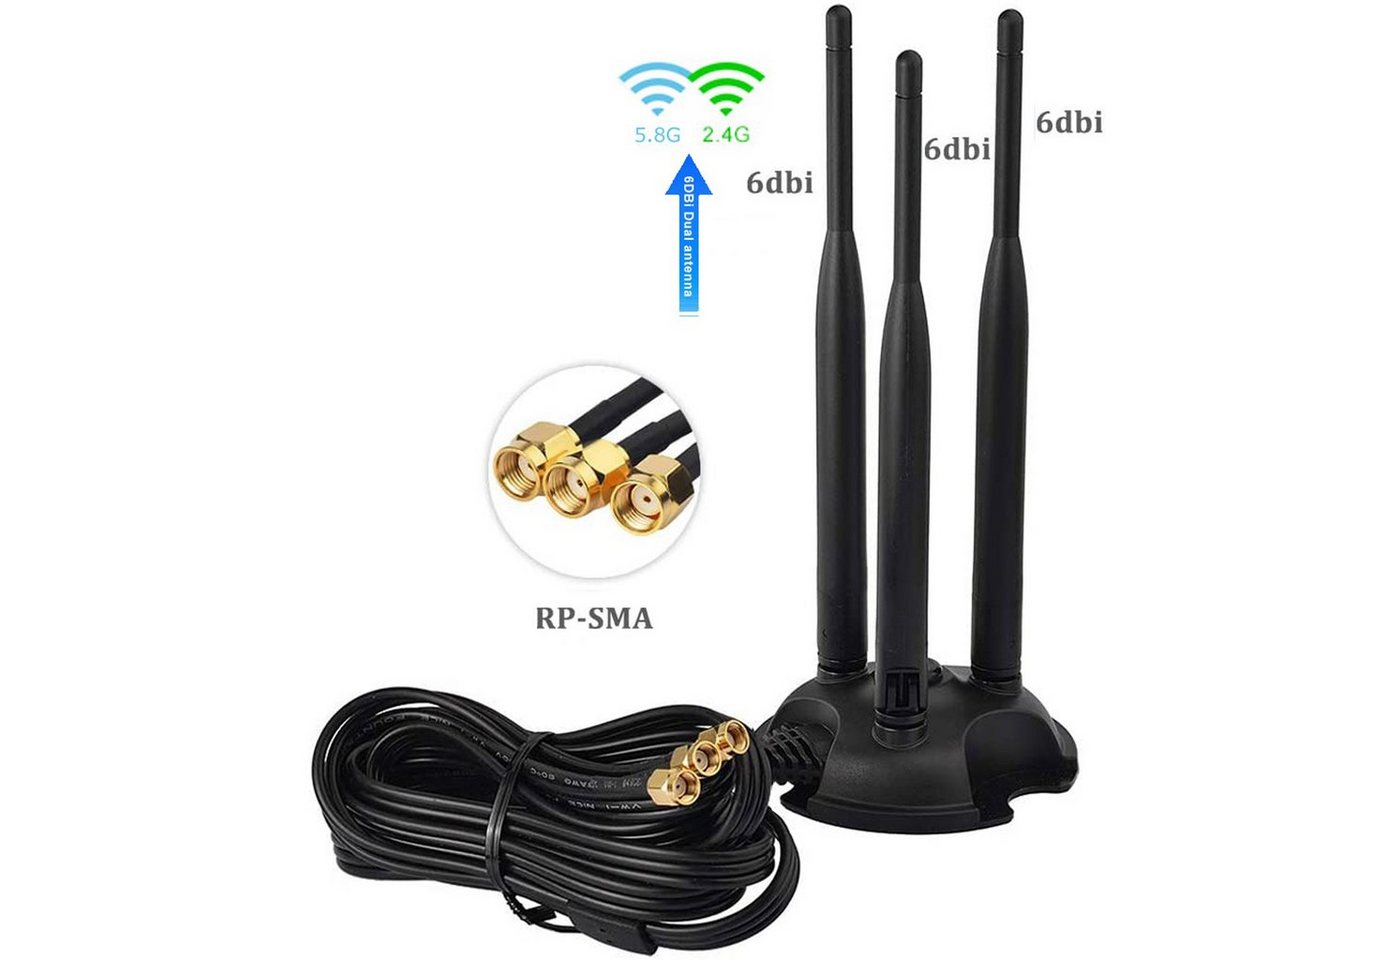 Bolwins L13D 3m 2.4G 5.8G WiFi Antenne 3x 6dBi RP-SMA Adapter Kabel Standfuss WLAN-Antenne von Bolwins